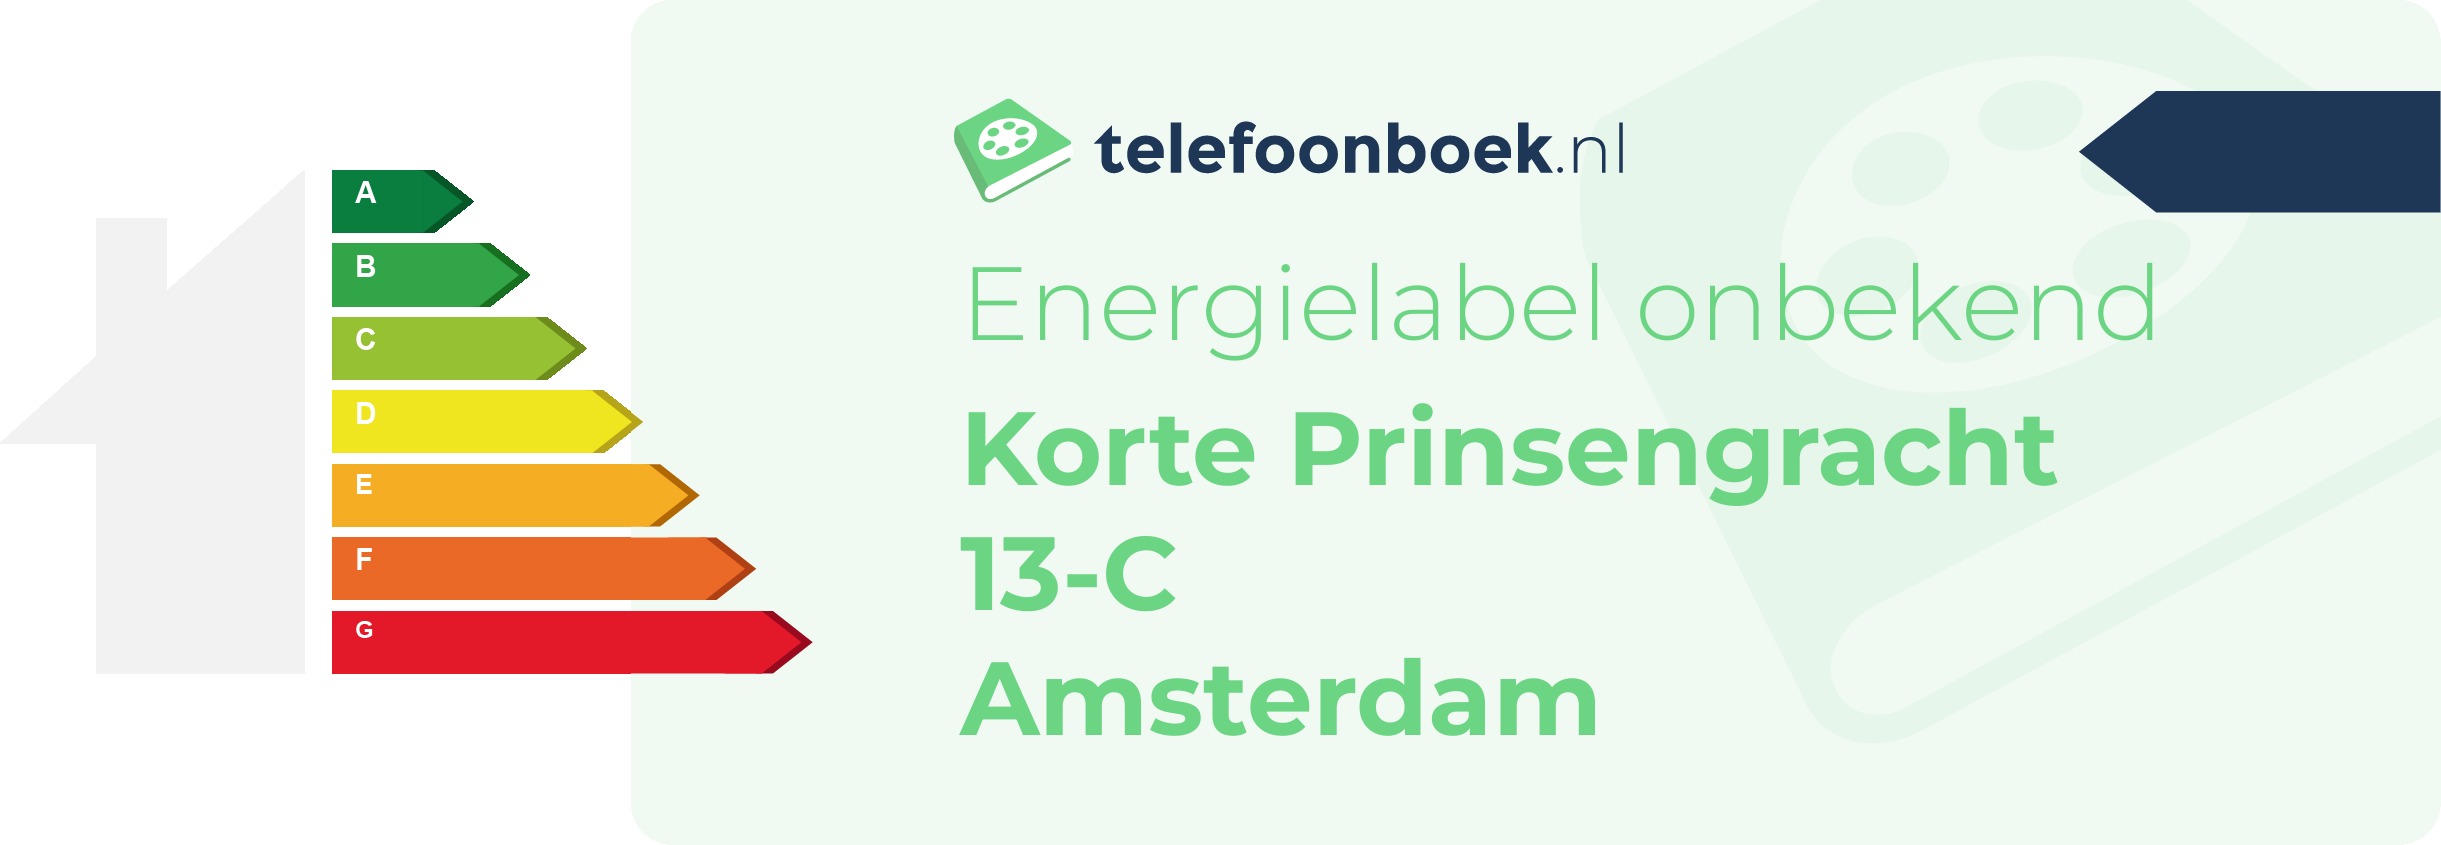 Energielabel Korte Prinsengracht 13-C Amsterdam